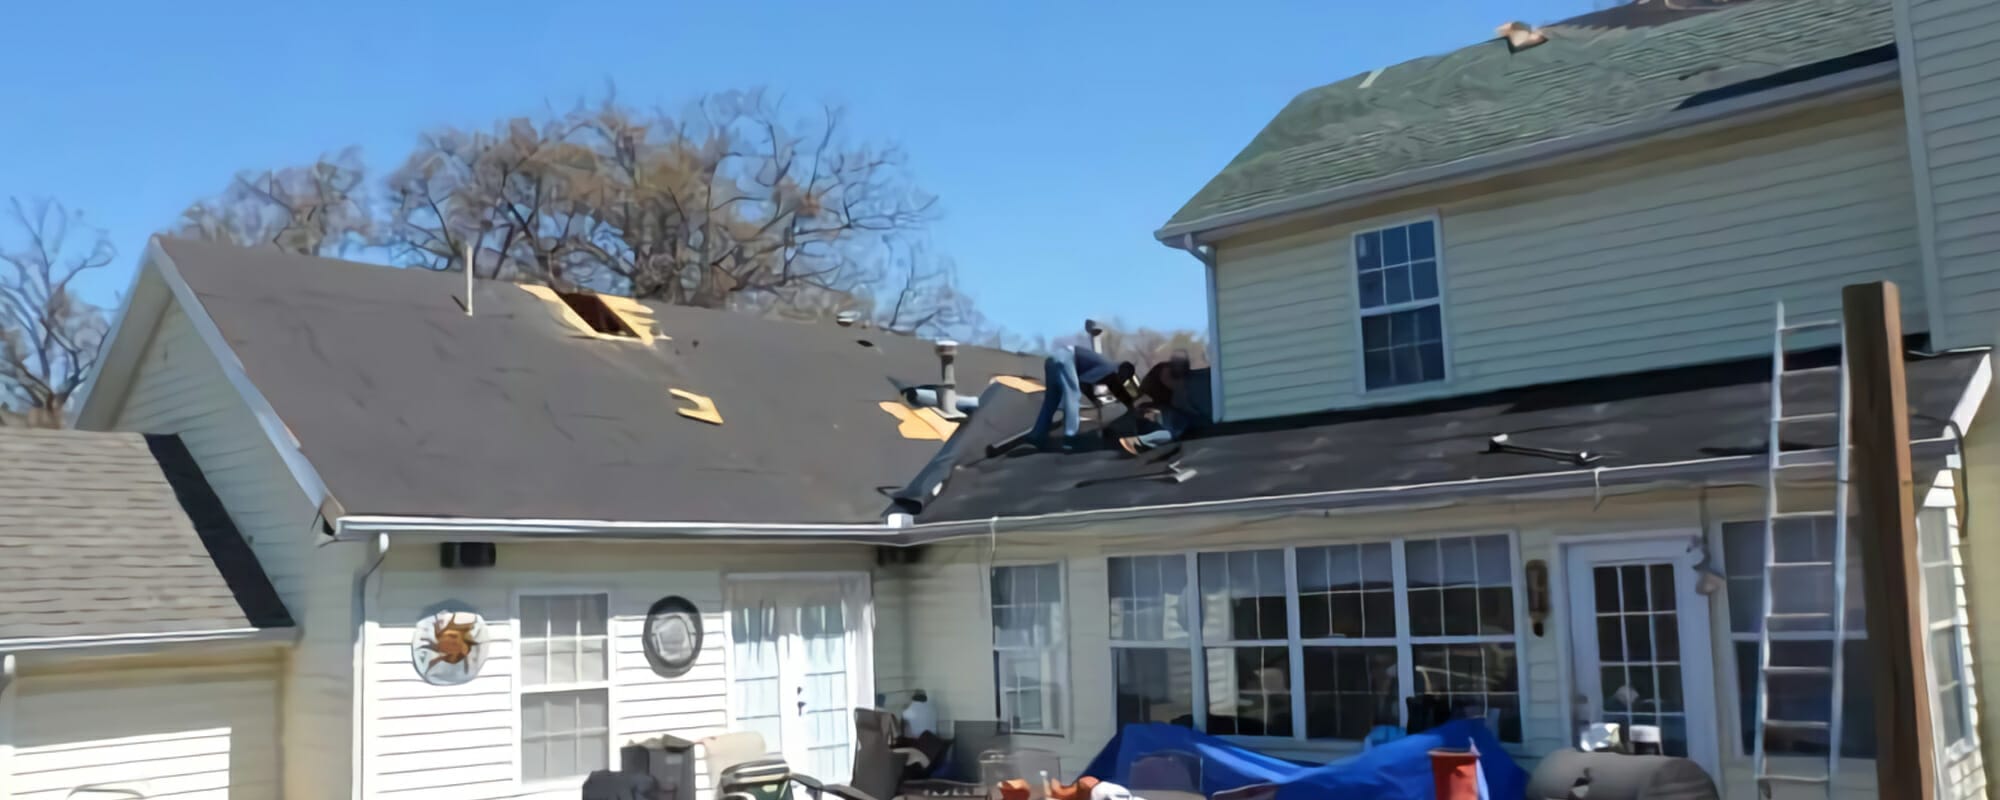 leading roofing contractors - Titan Roofing